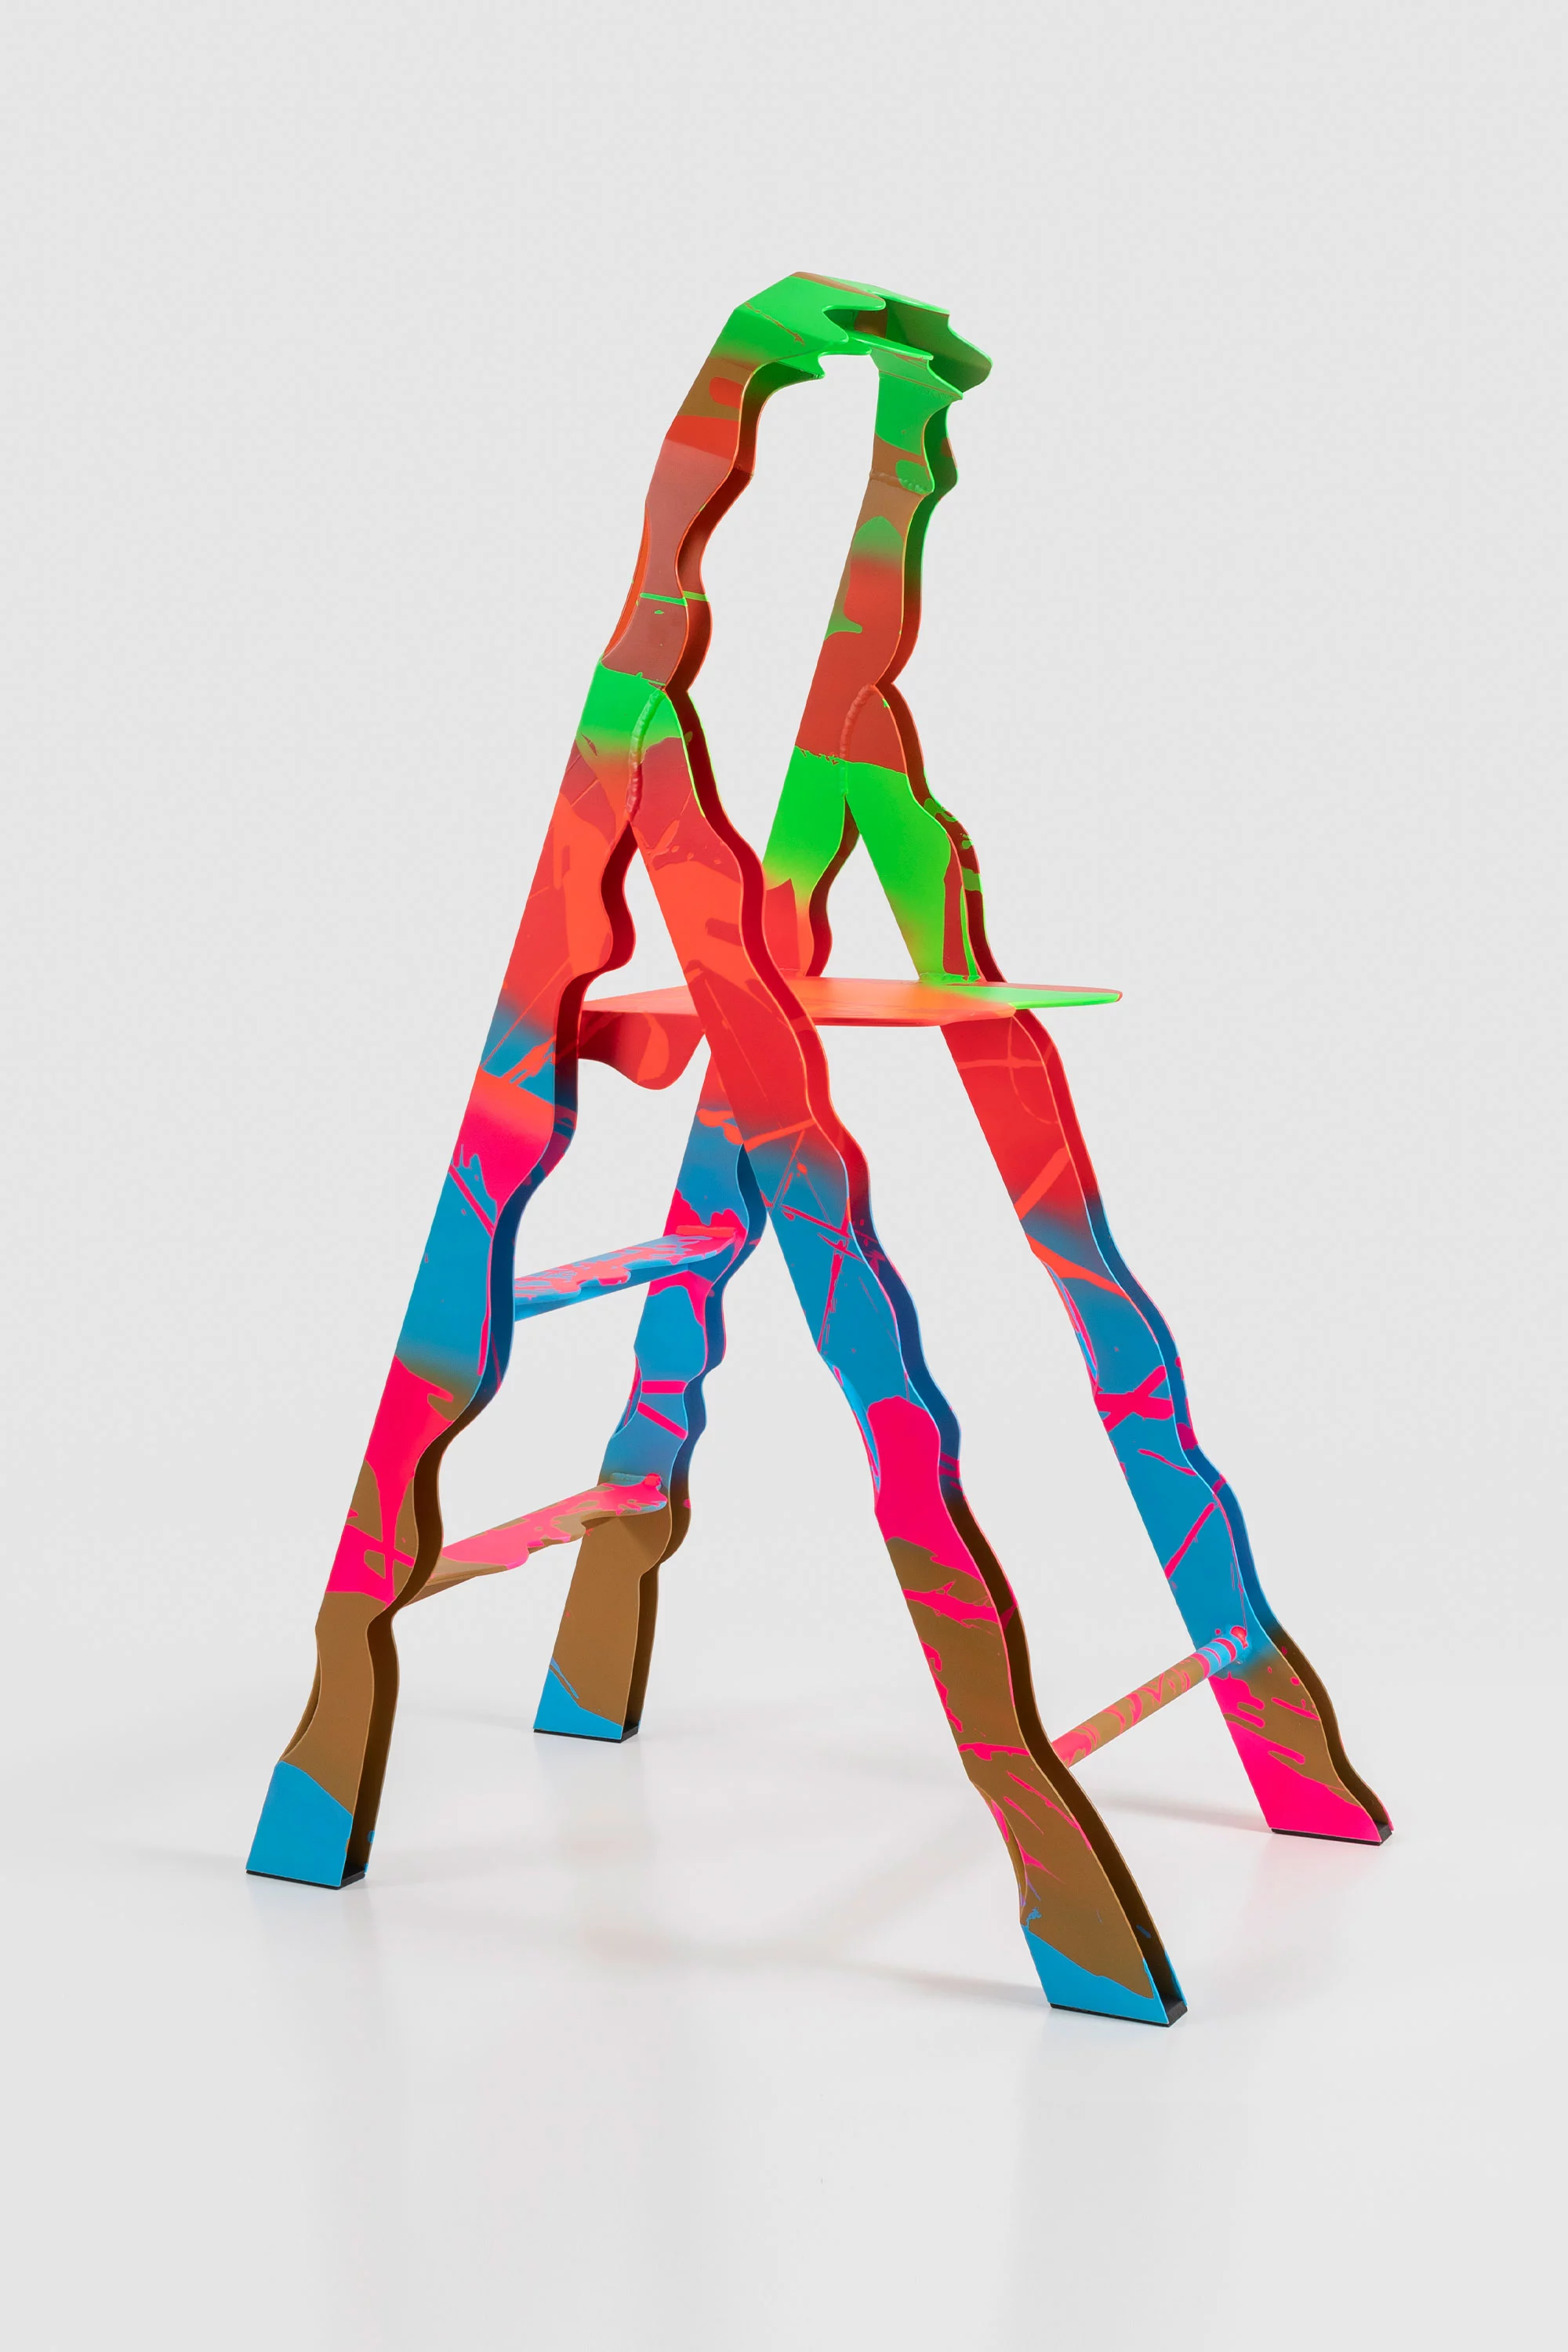 Acid Tracks Ladder - Jerszy Seymour - Miscellaneous - Galerie kreo